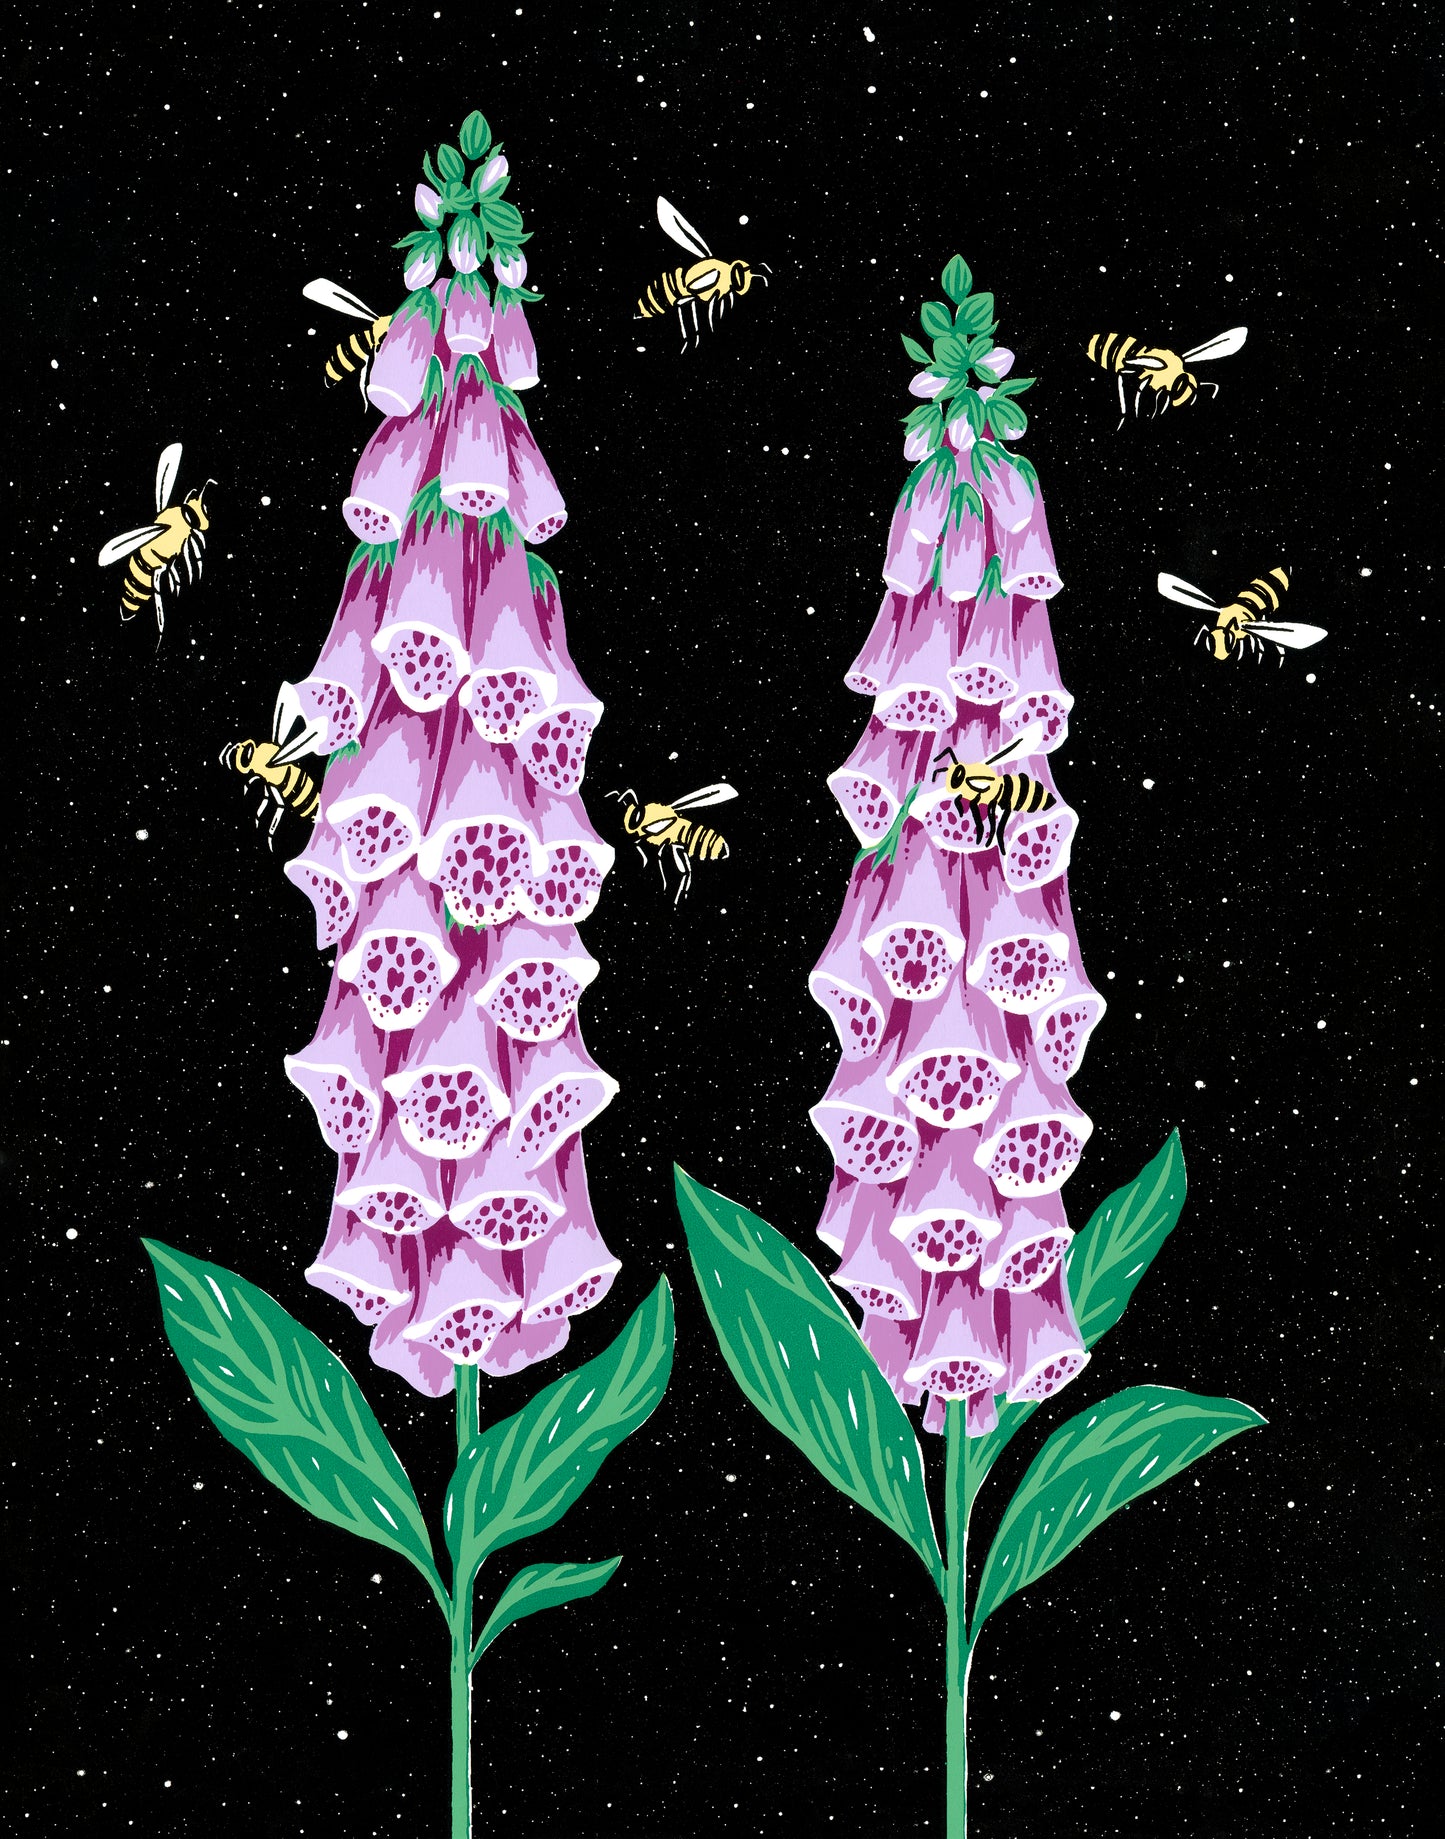 Original painting of foxglove flowers with honeybees